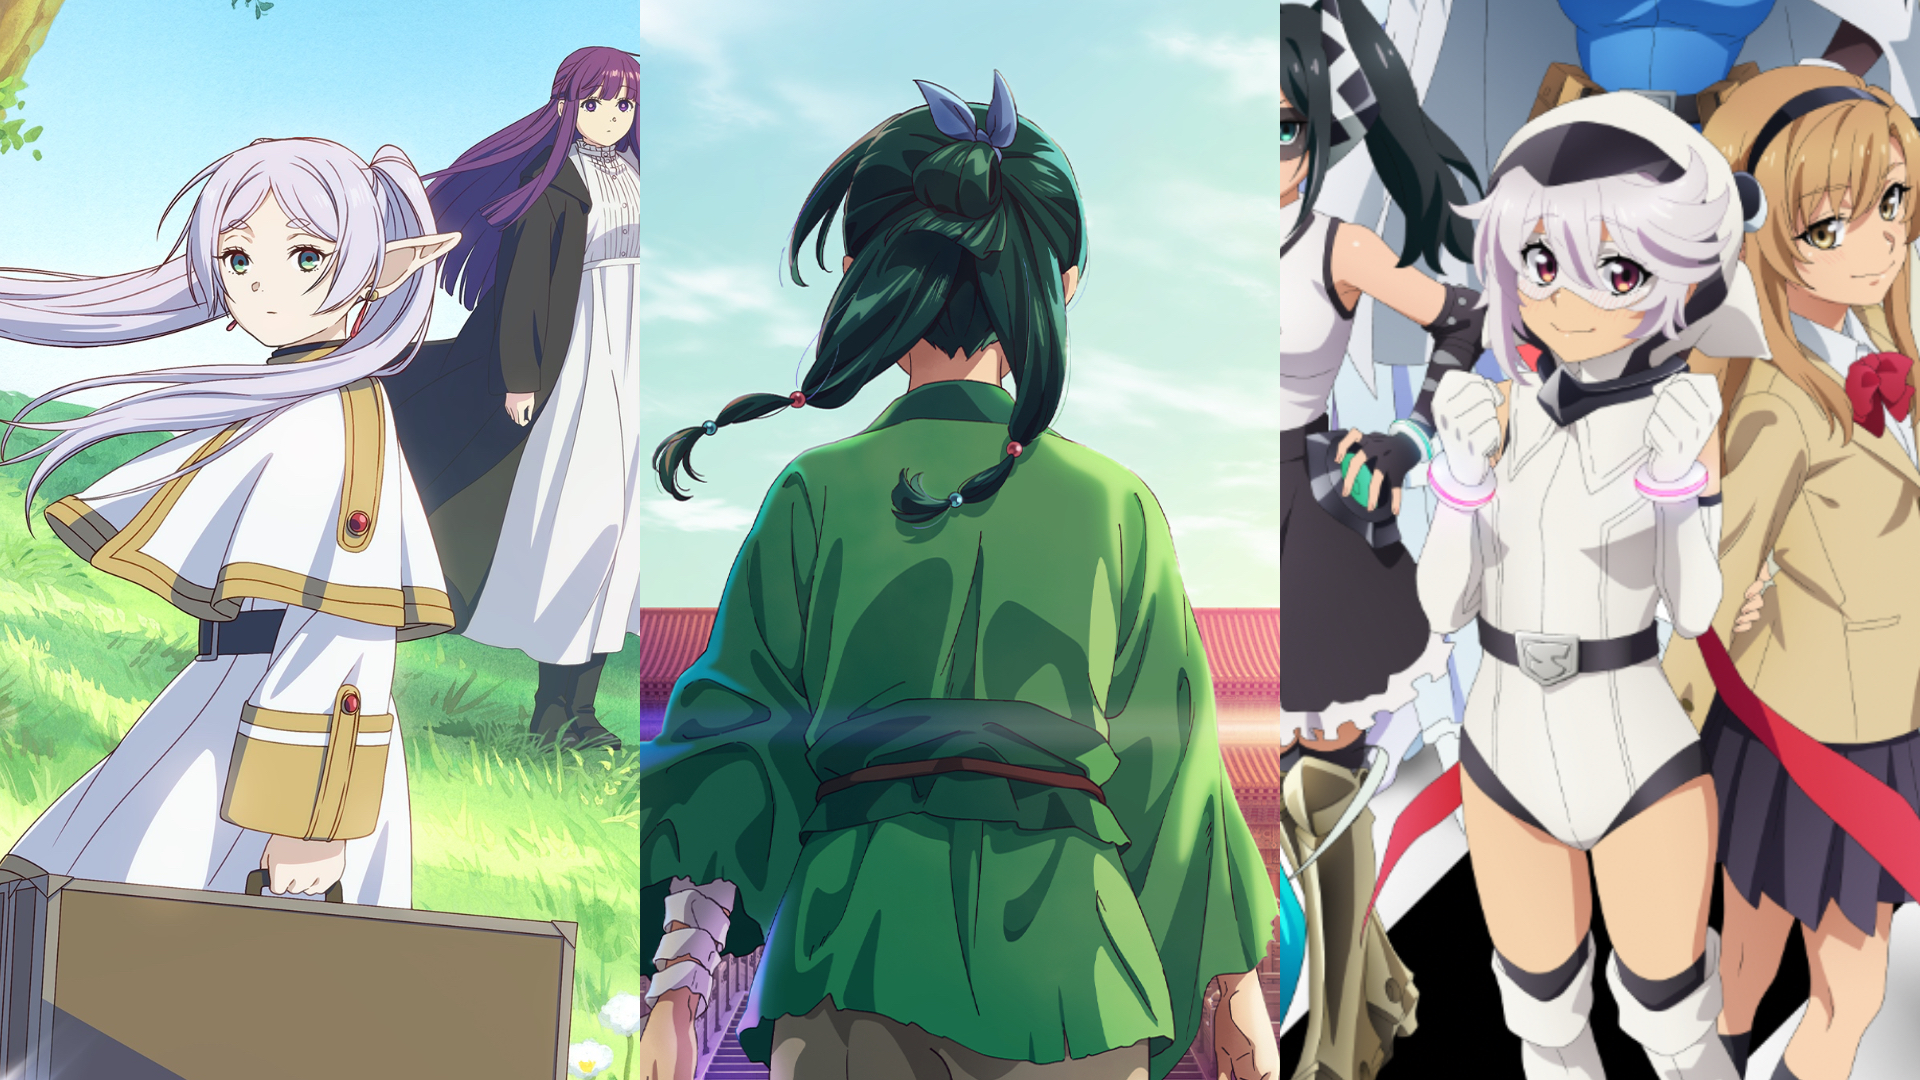 Sasaki and Miyano: Graduation Anime Film Launches September 28 on  Crunchyroll - Crunchyroll News